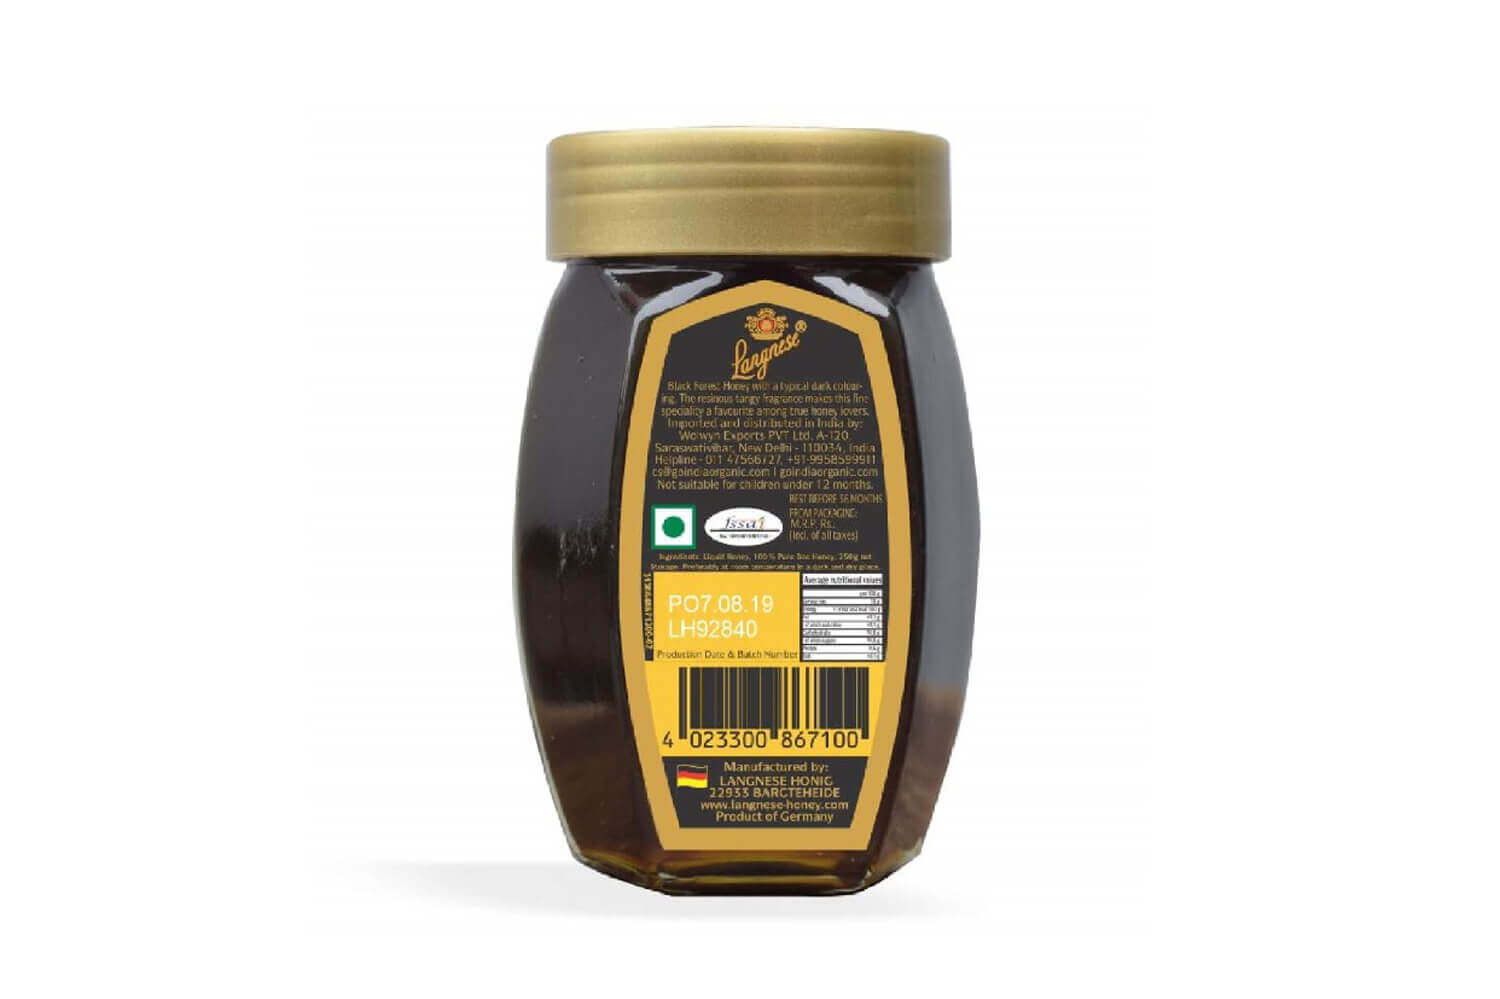 Natural Pure Langnese Honey